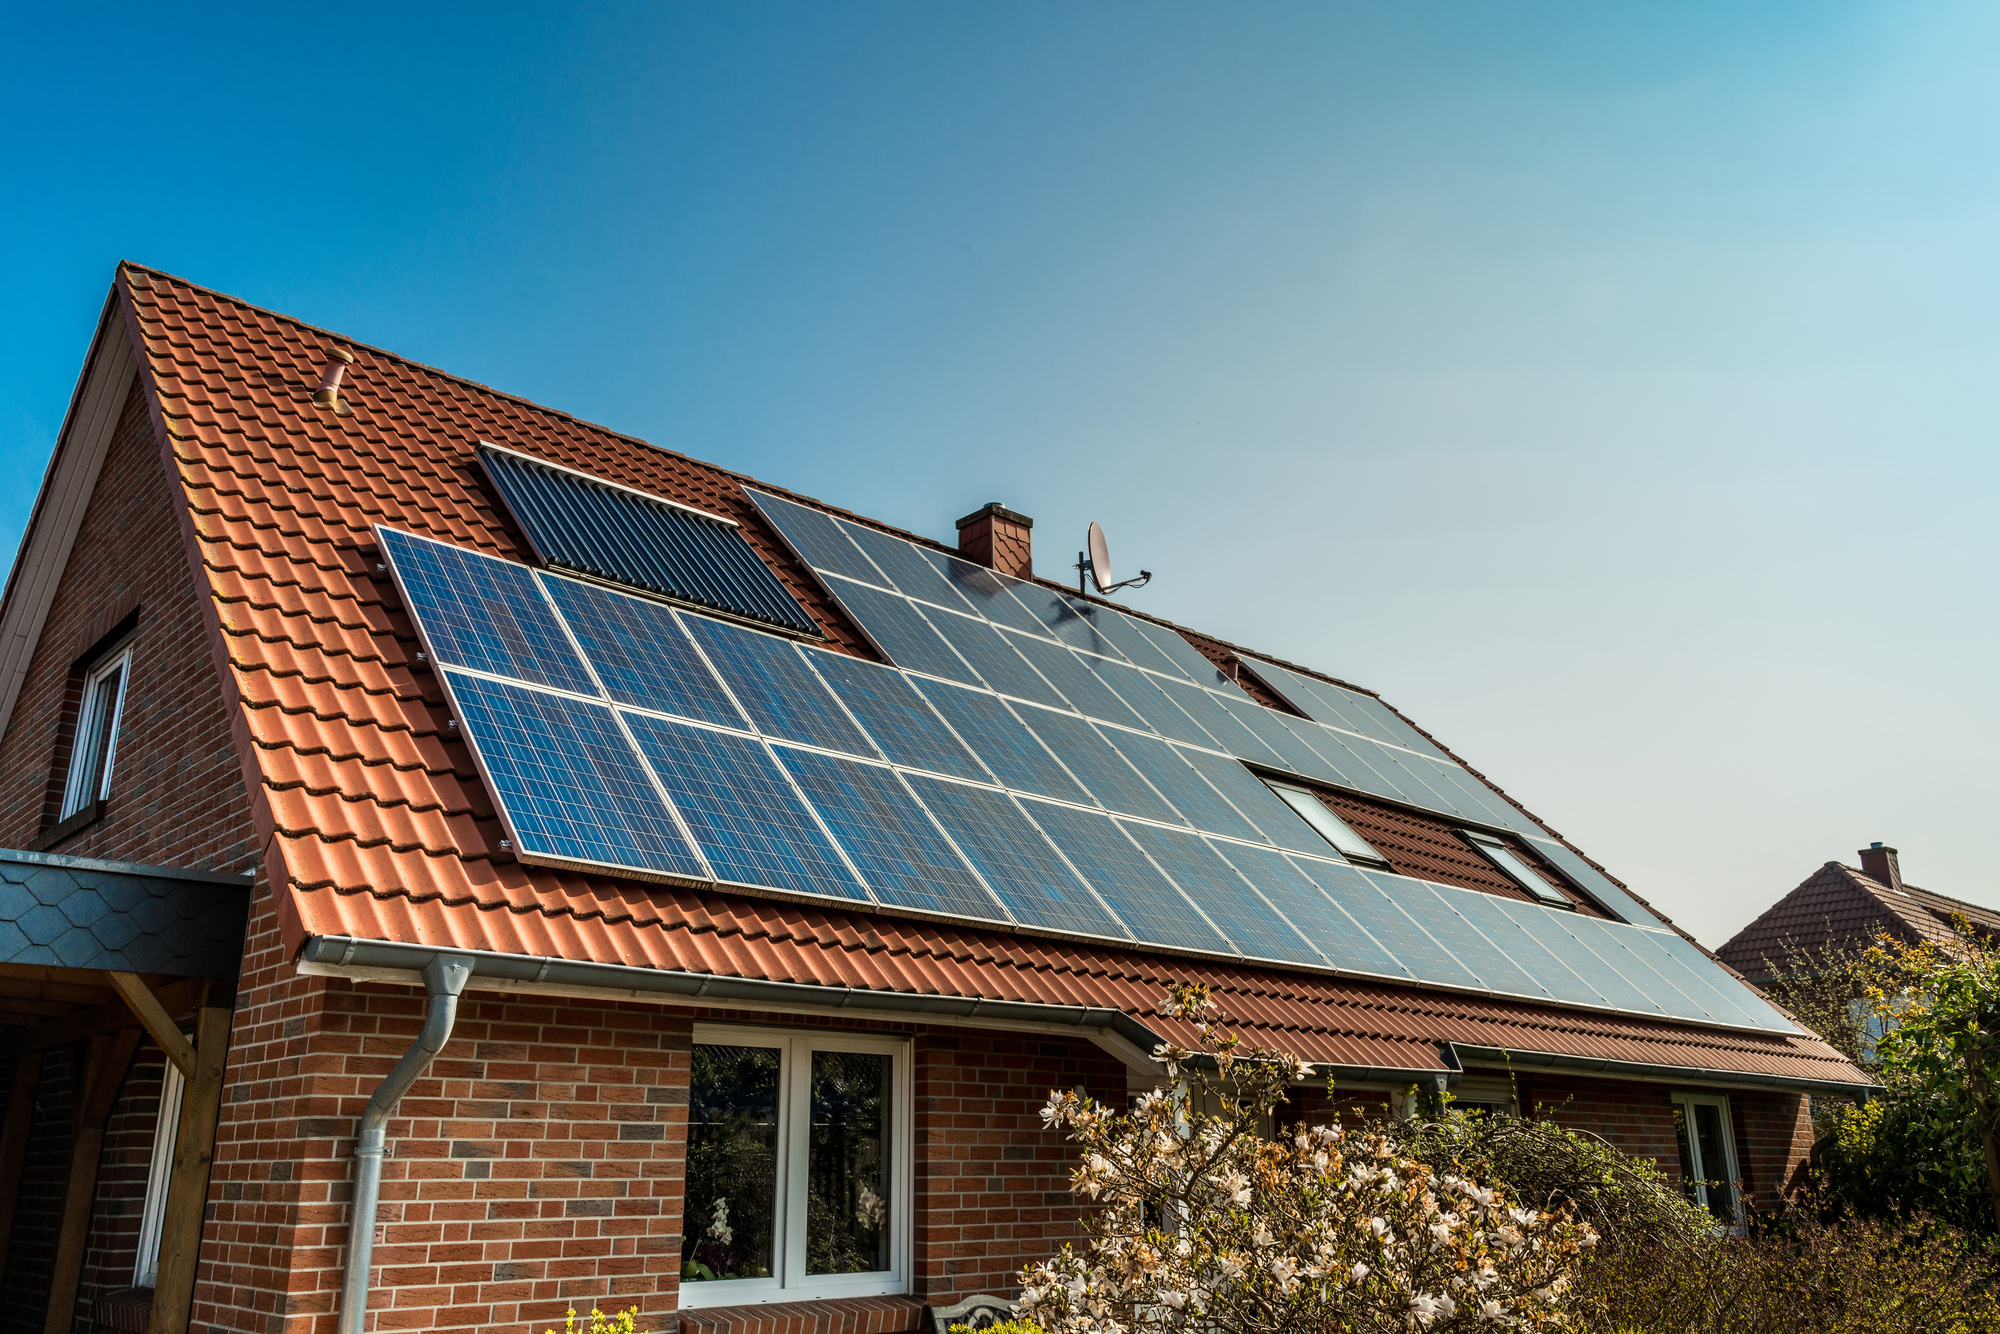 solar financing options